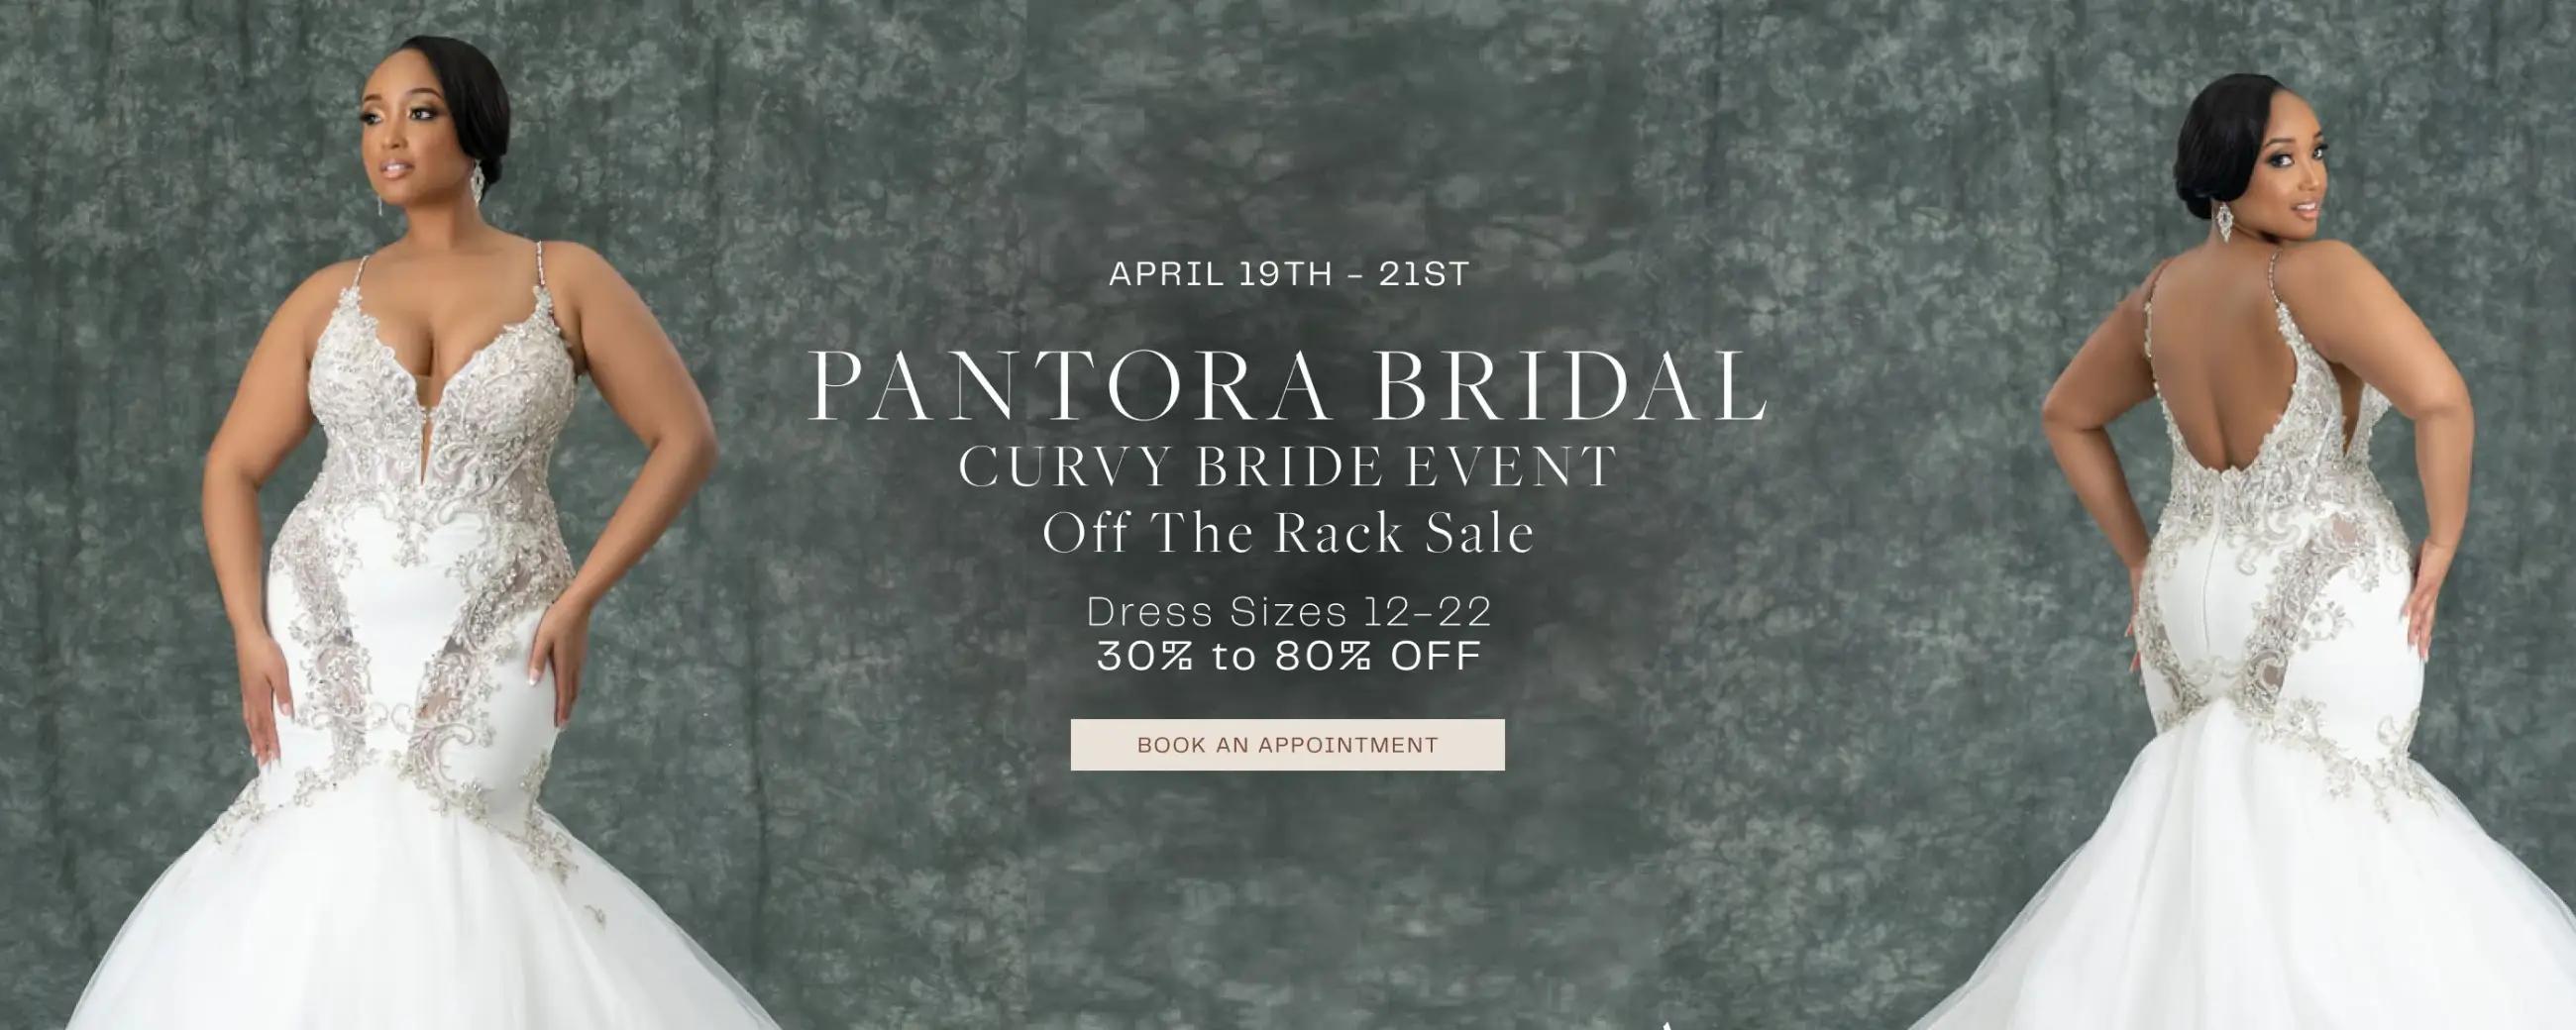 Pantora Bridal Curvy Bride Event Banner